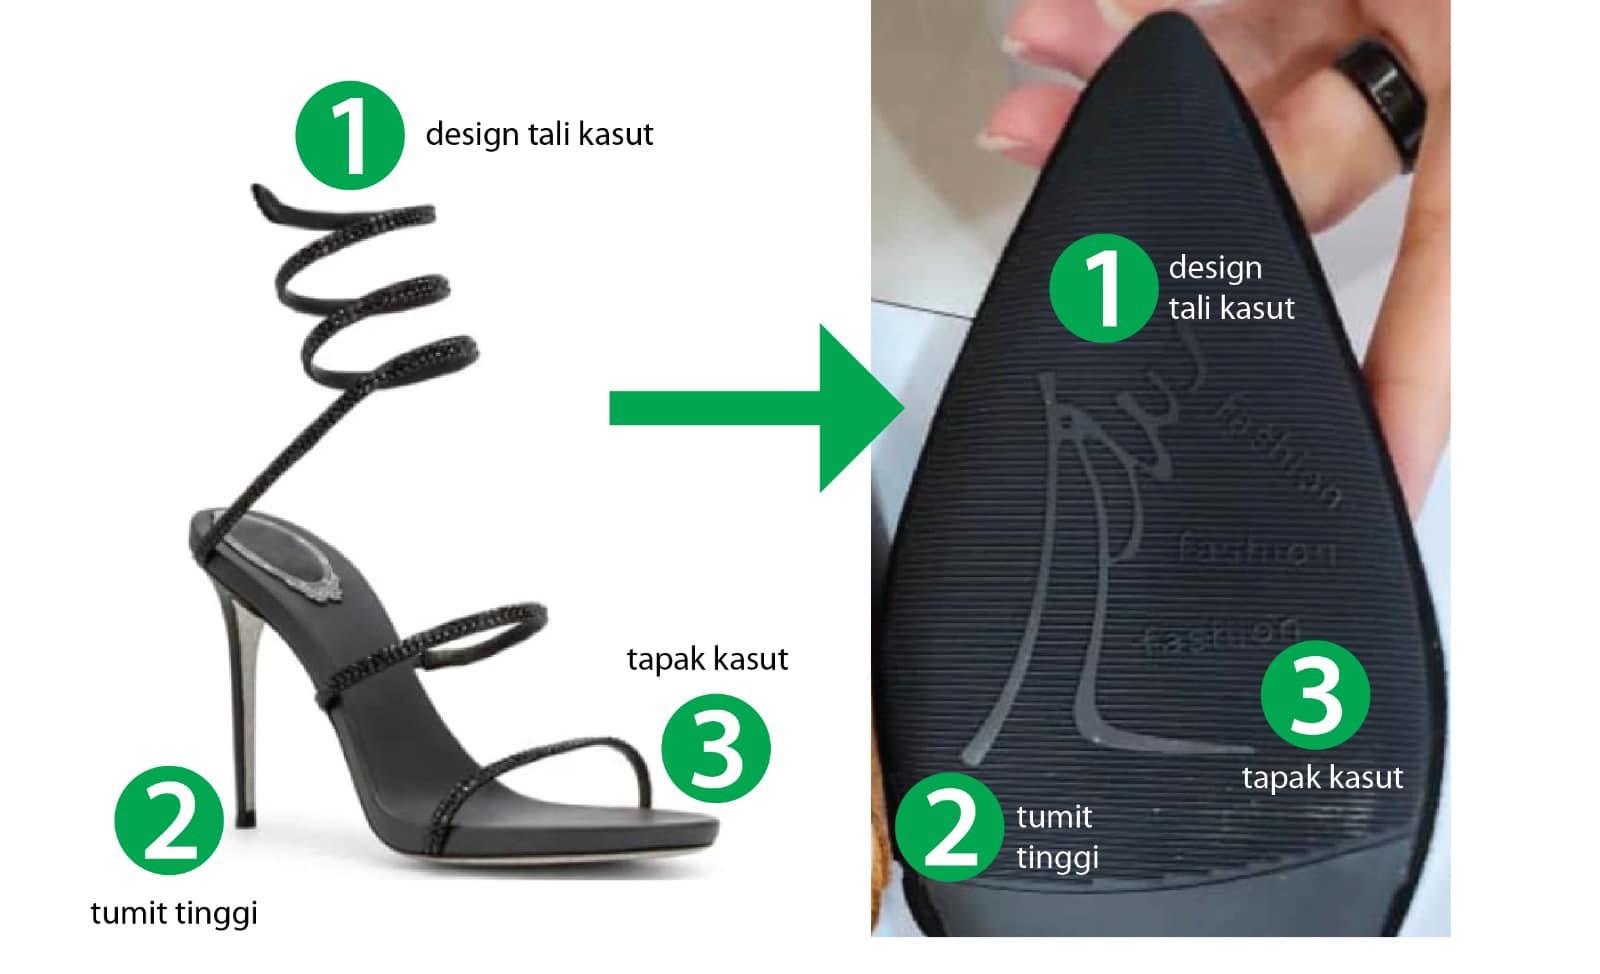 Vern's shoe logo does not match 'Allah' script in 'khat' art: experts